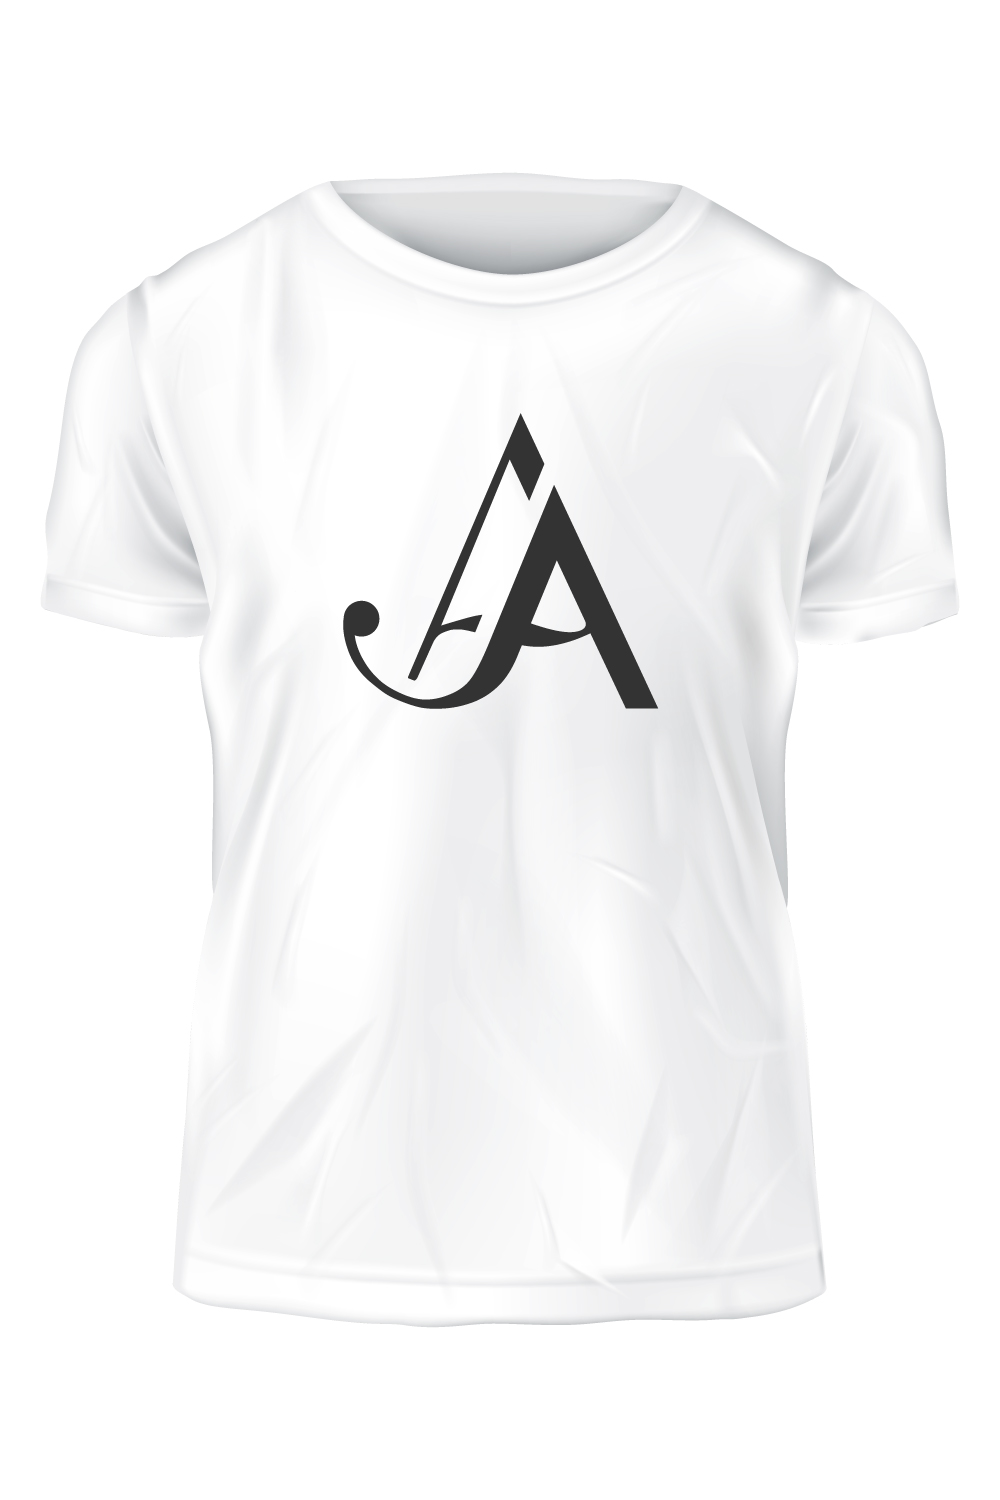 AJ luxury logo design pinterest preview image.